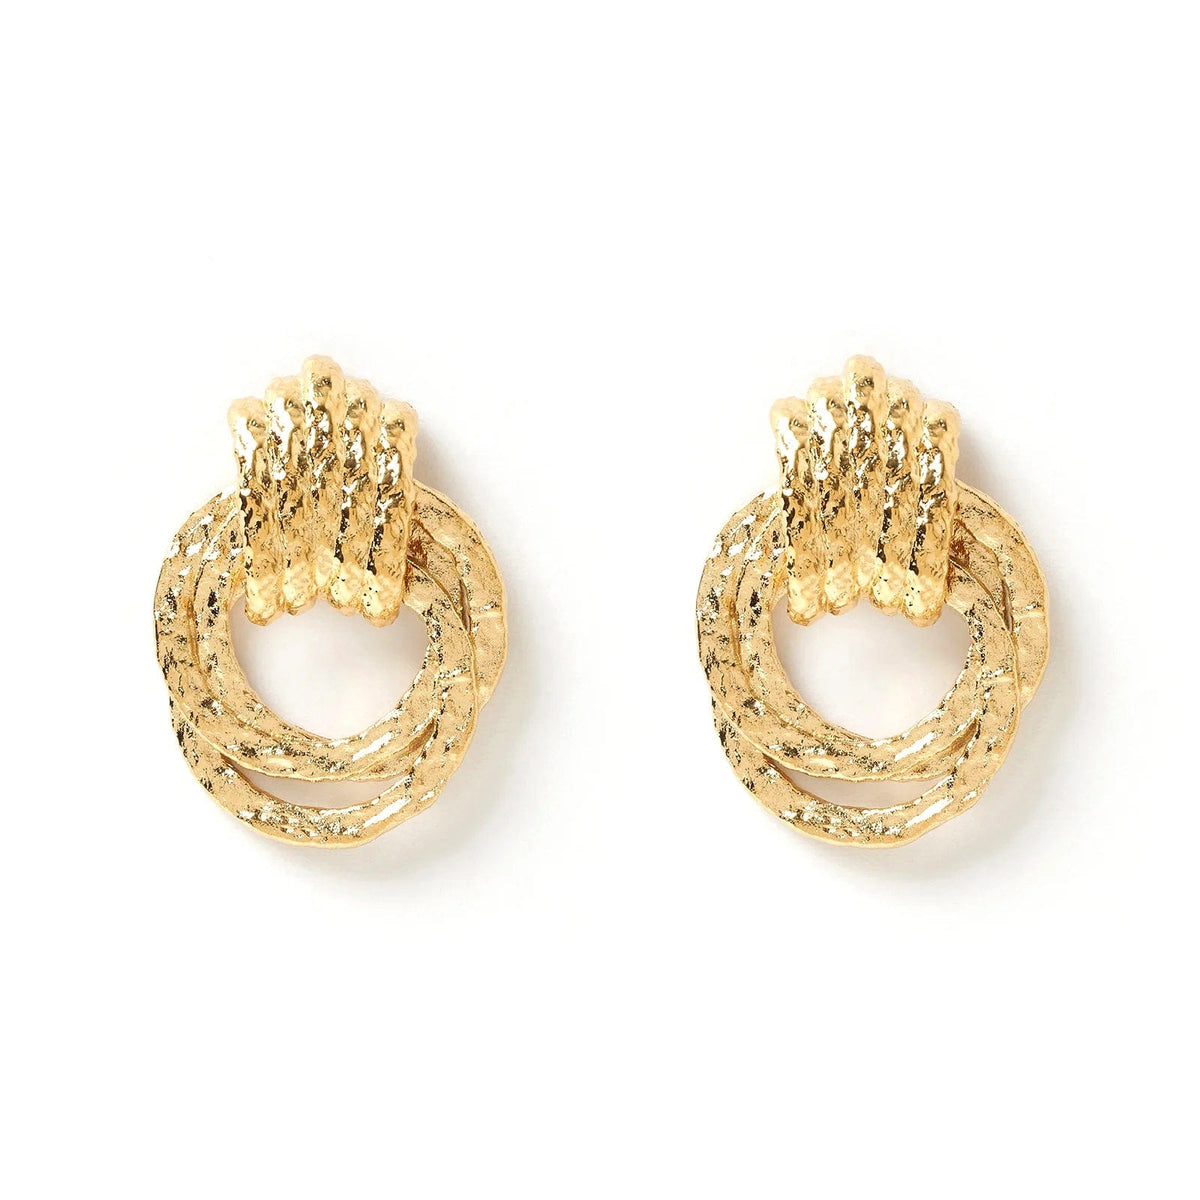 Arms of Eve Earrings Arms of Eve, Effie Gold Earrings